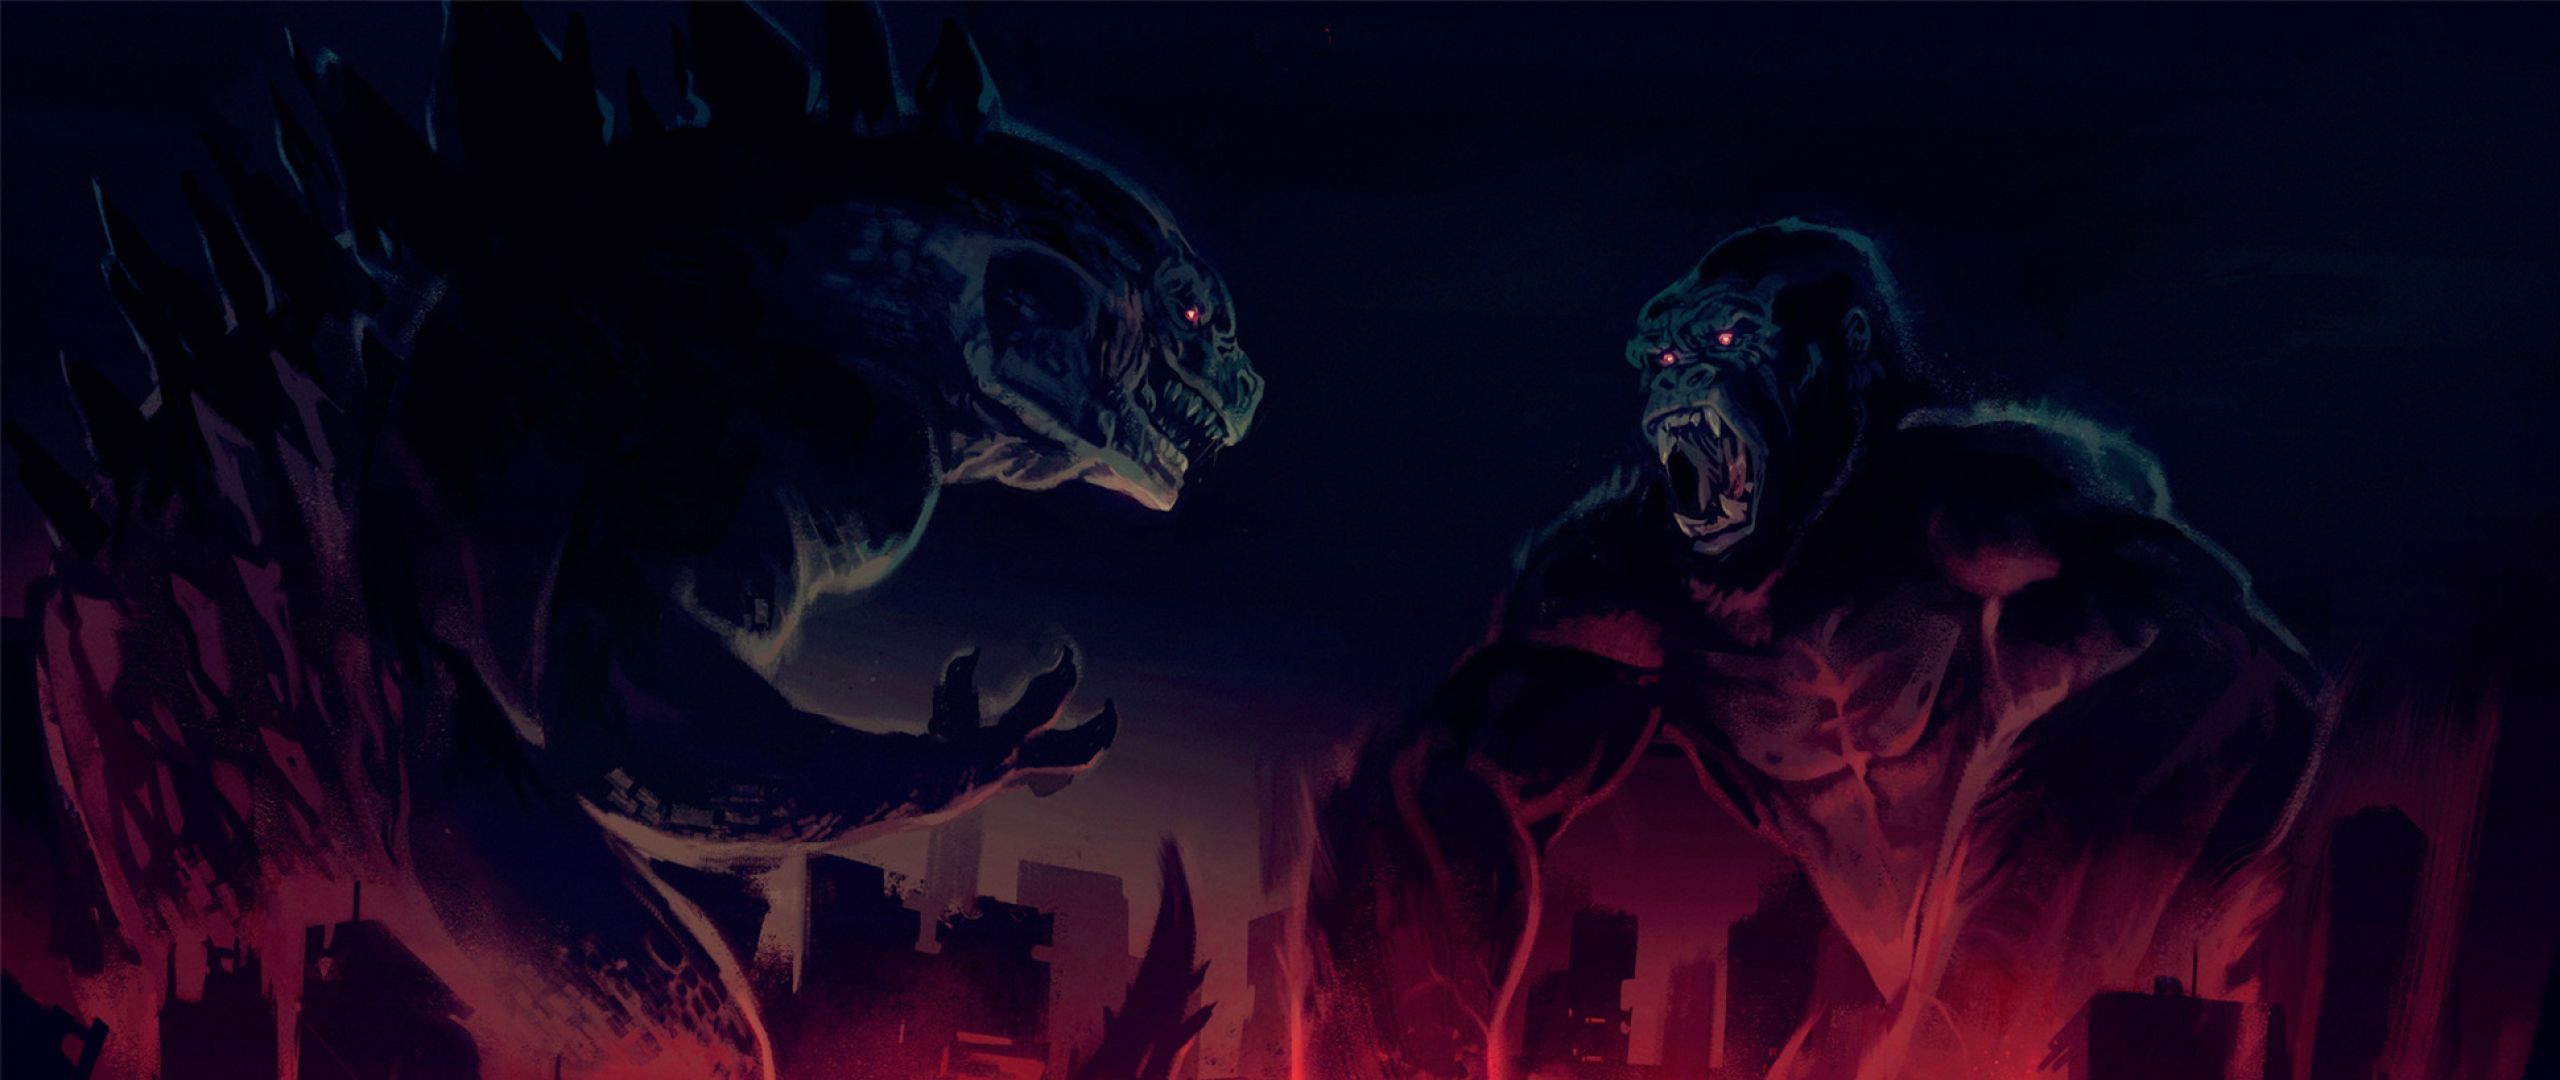 King Kong vs Godzilla Artwork 2560x1080 Resolution